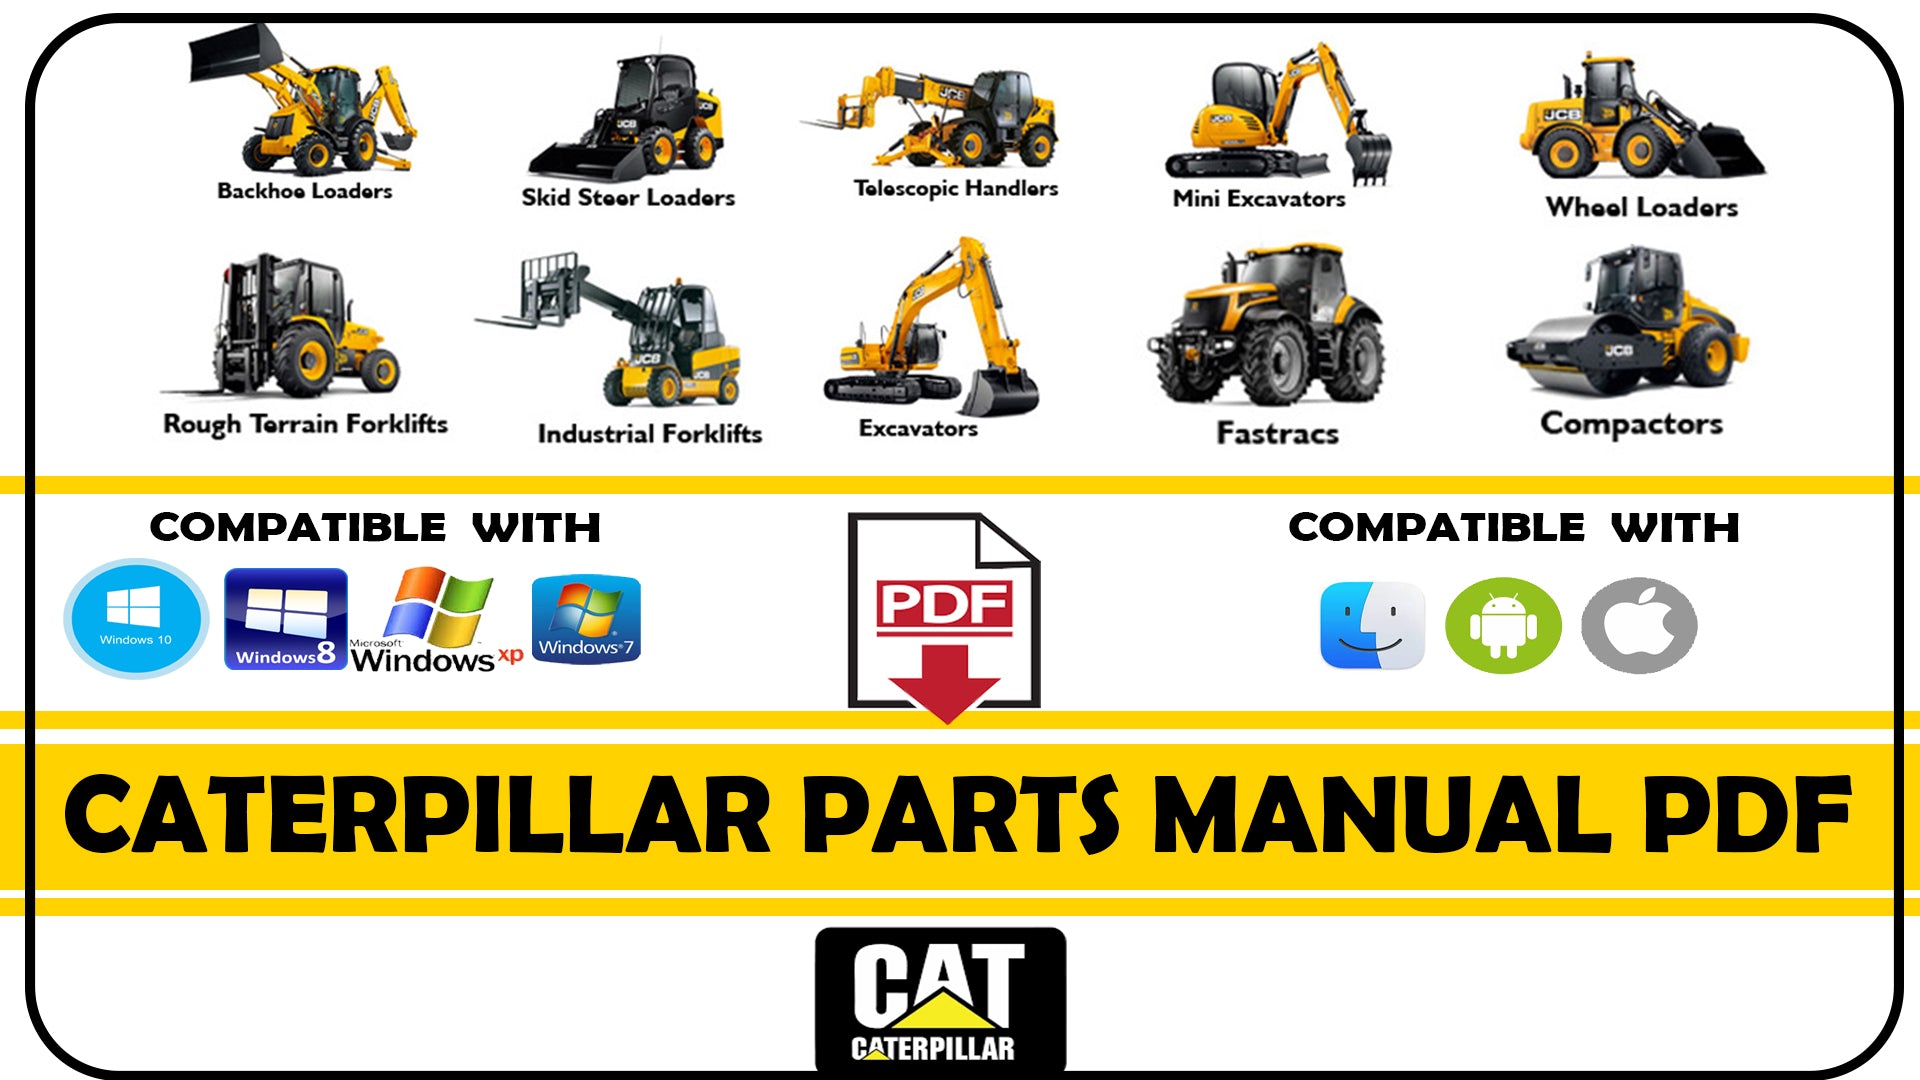 Cat Caterpillar Pm622 Cold Planer Parts Catalog Manual Serial Number :- Jcf00001-up